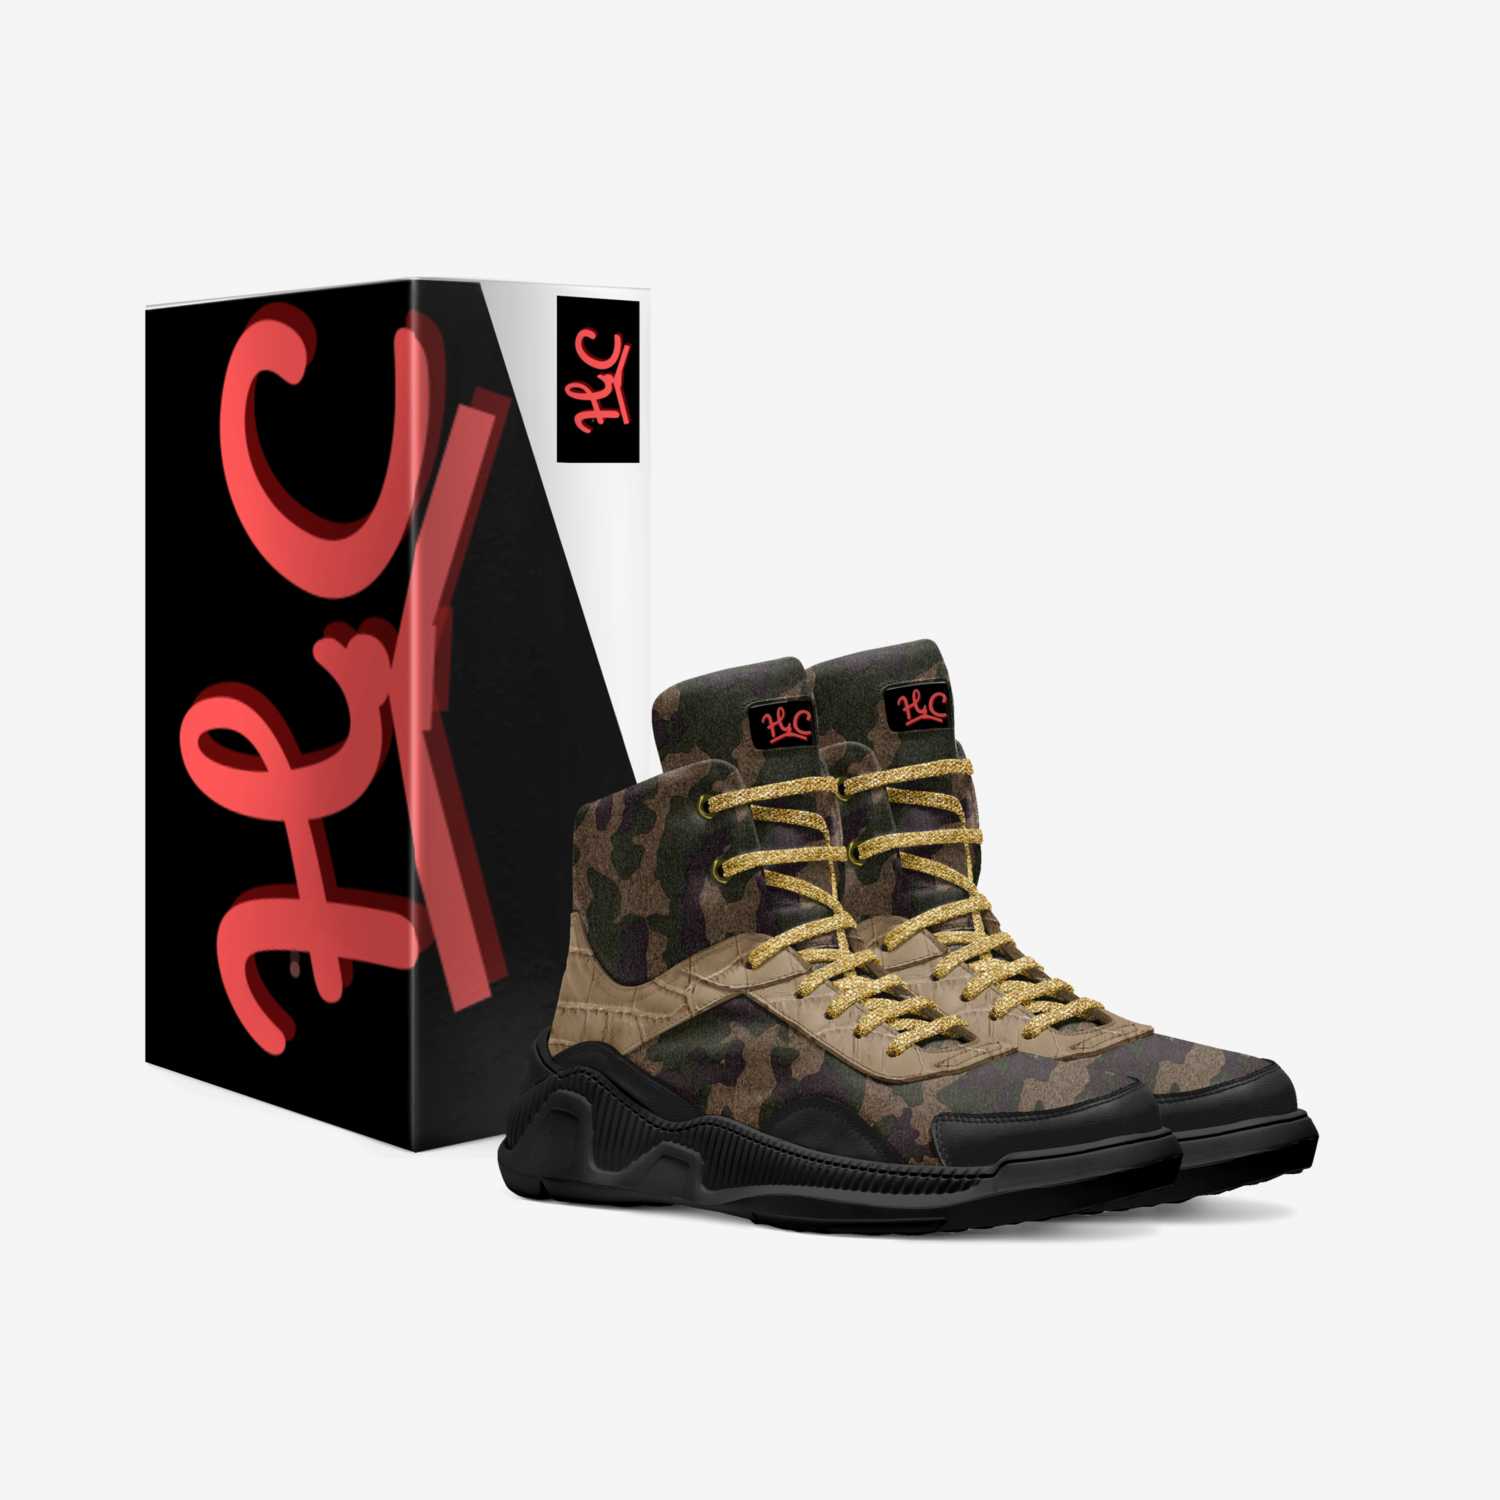 LOG custom made in Italy shoes by Abdijabar Galgallo | Box view